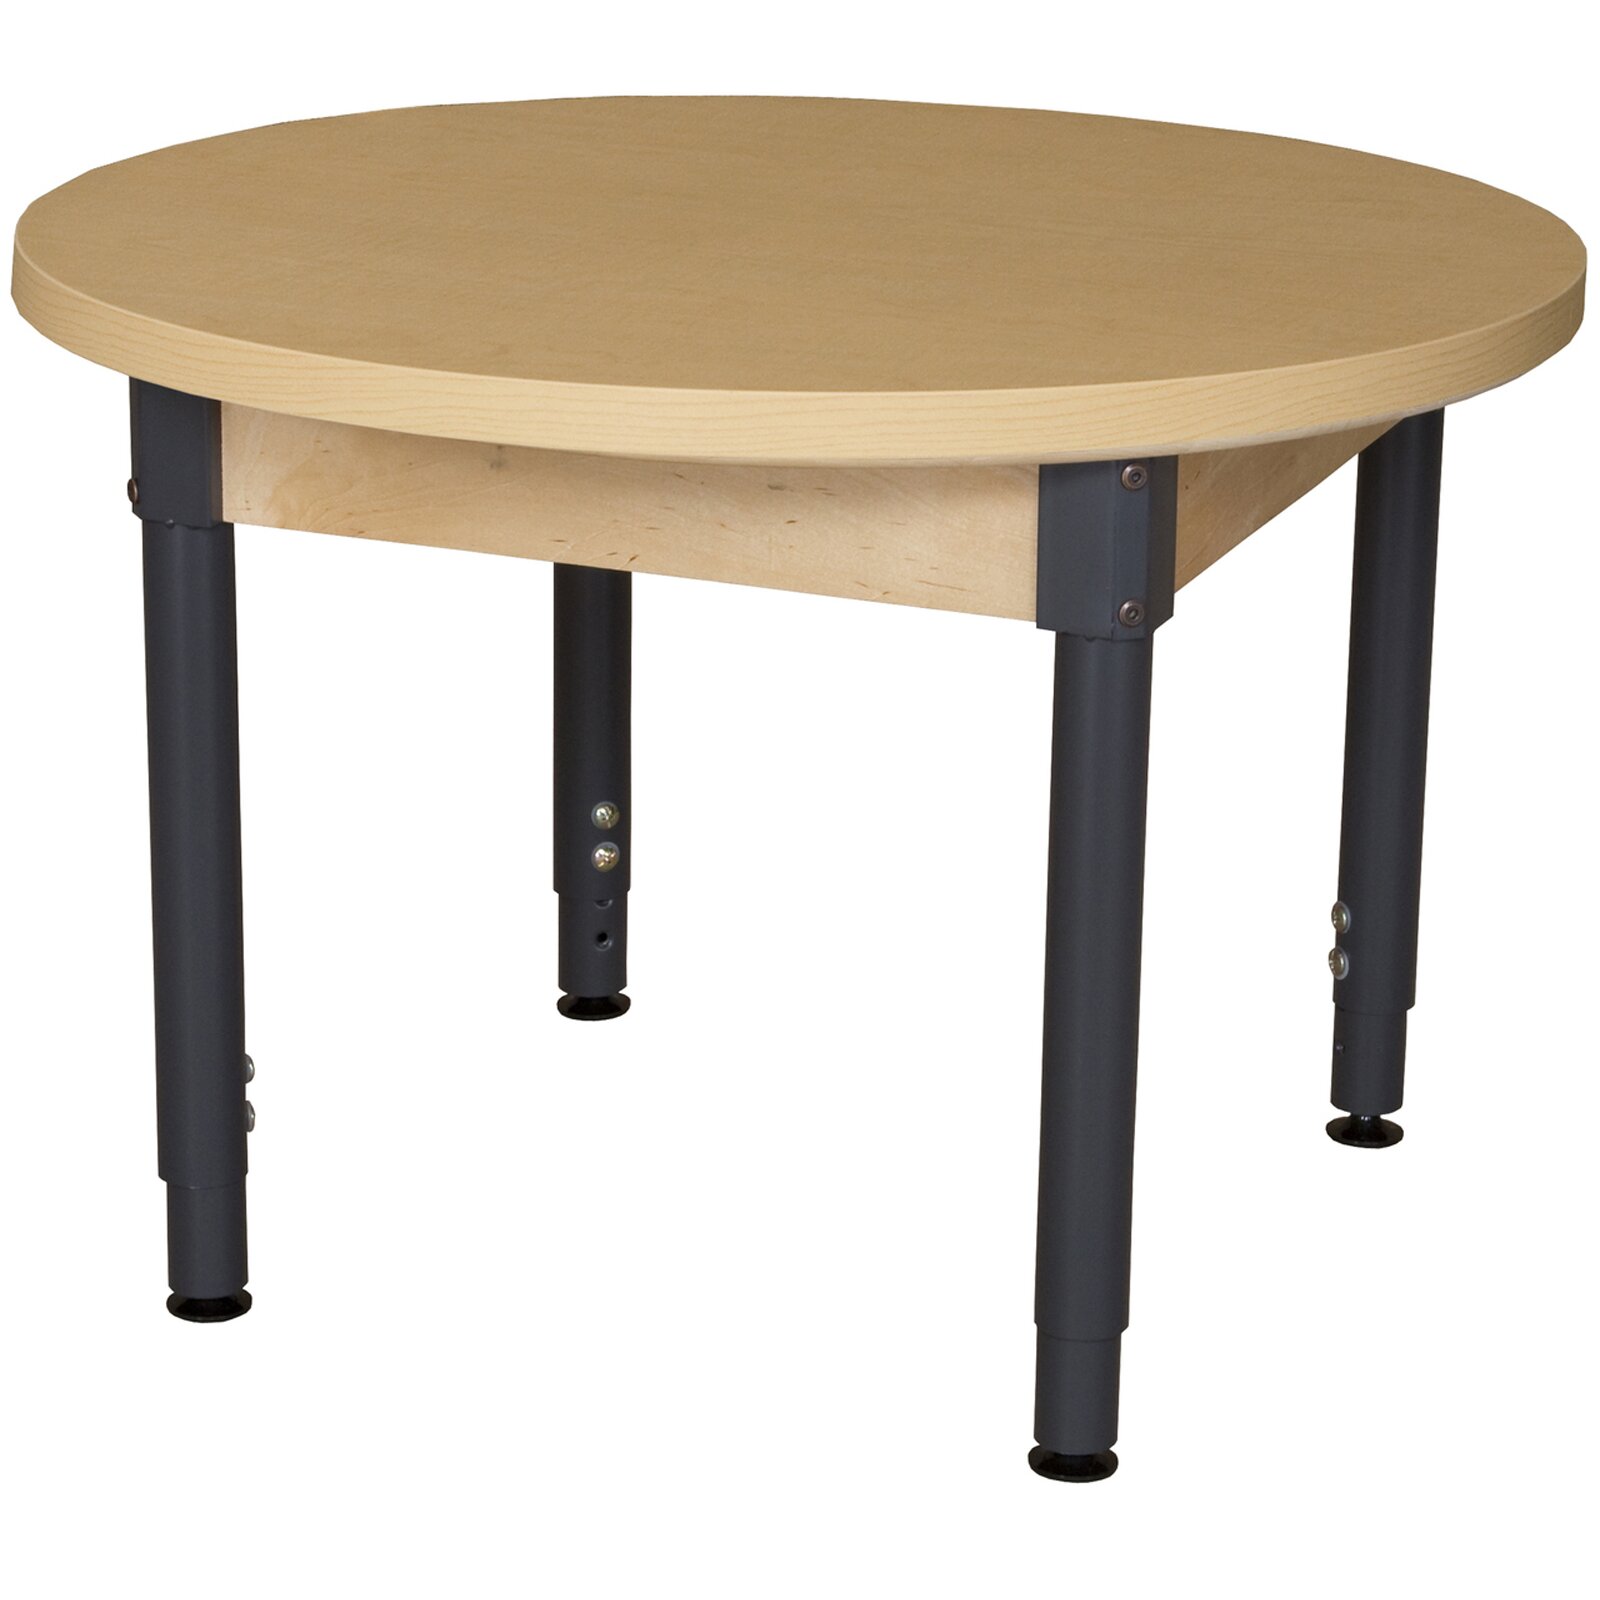 Wood Designs Round High Pressure Laminate Table 